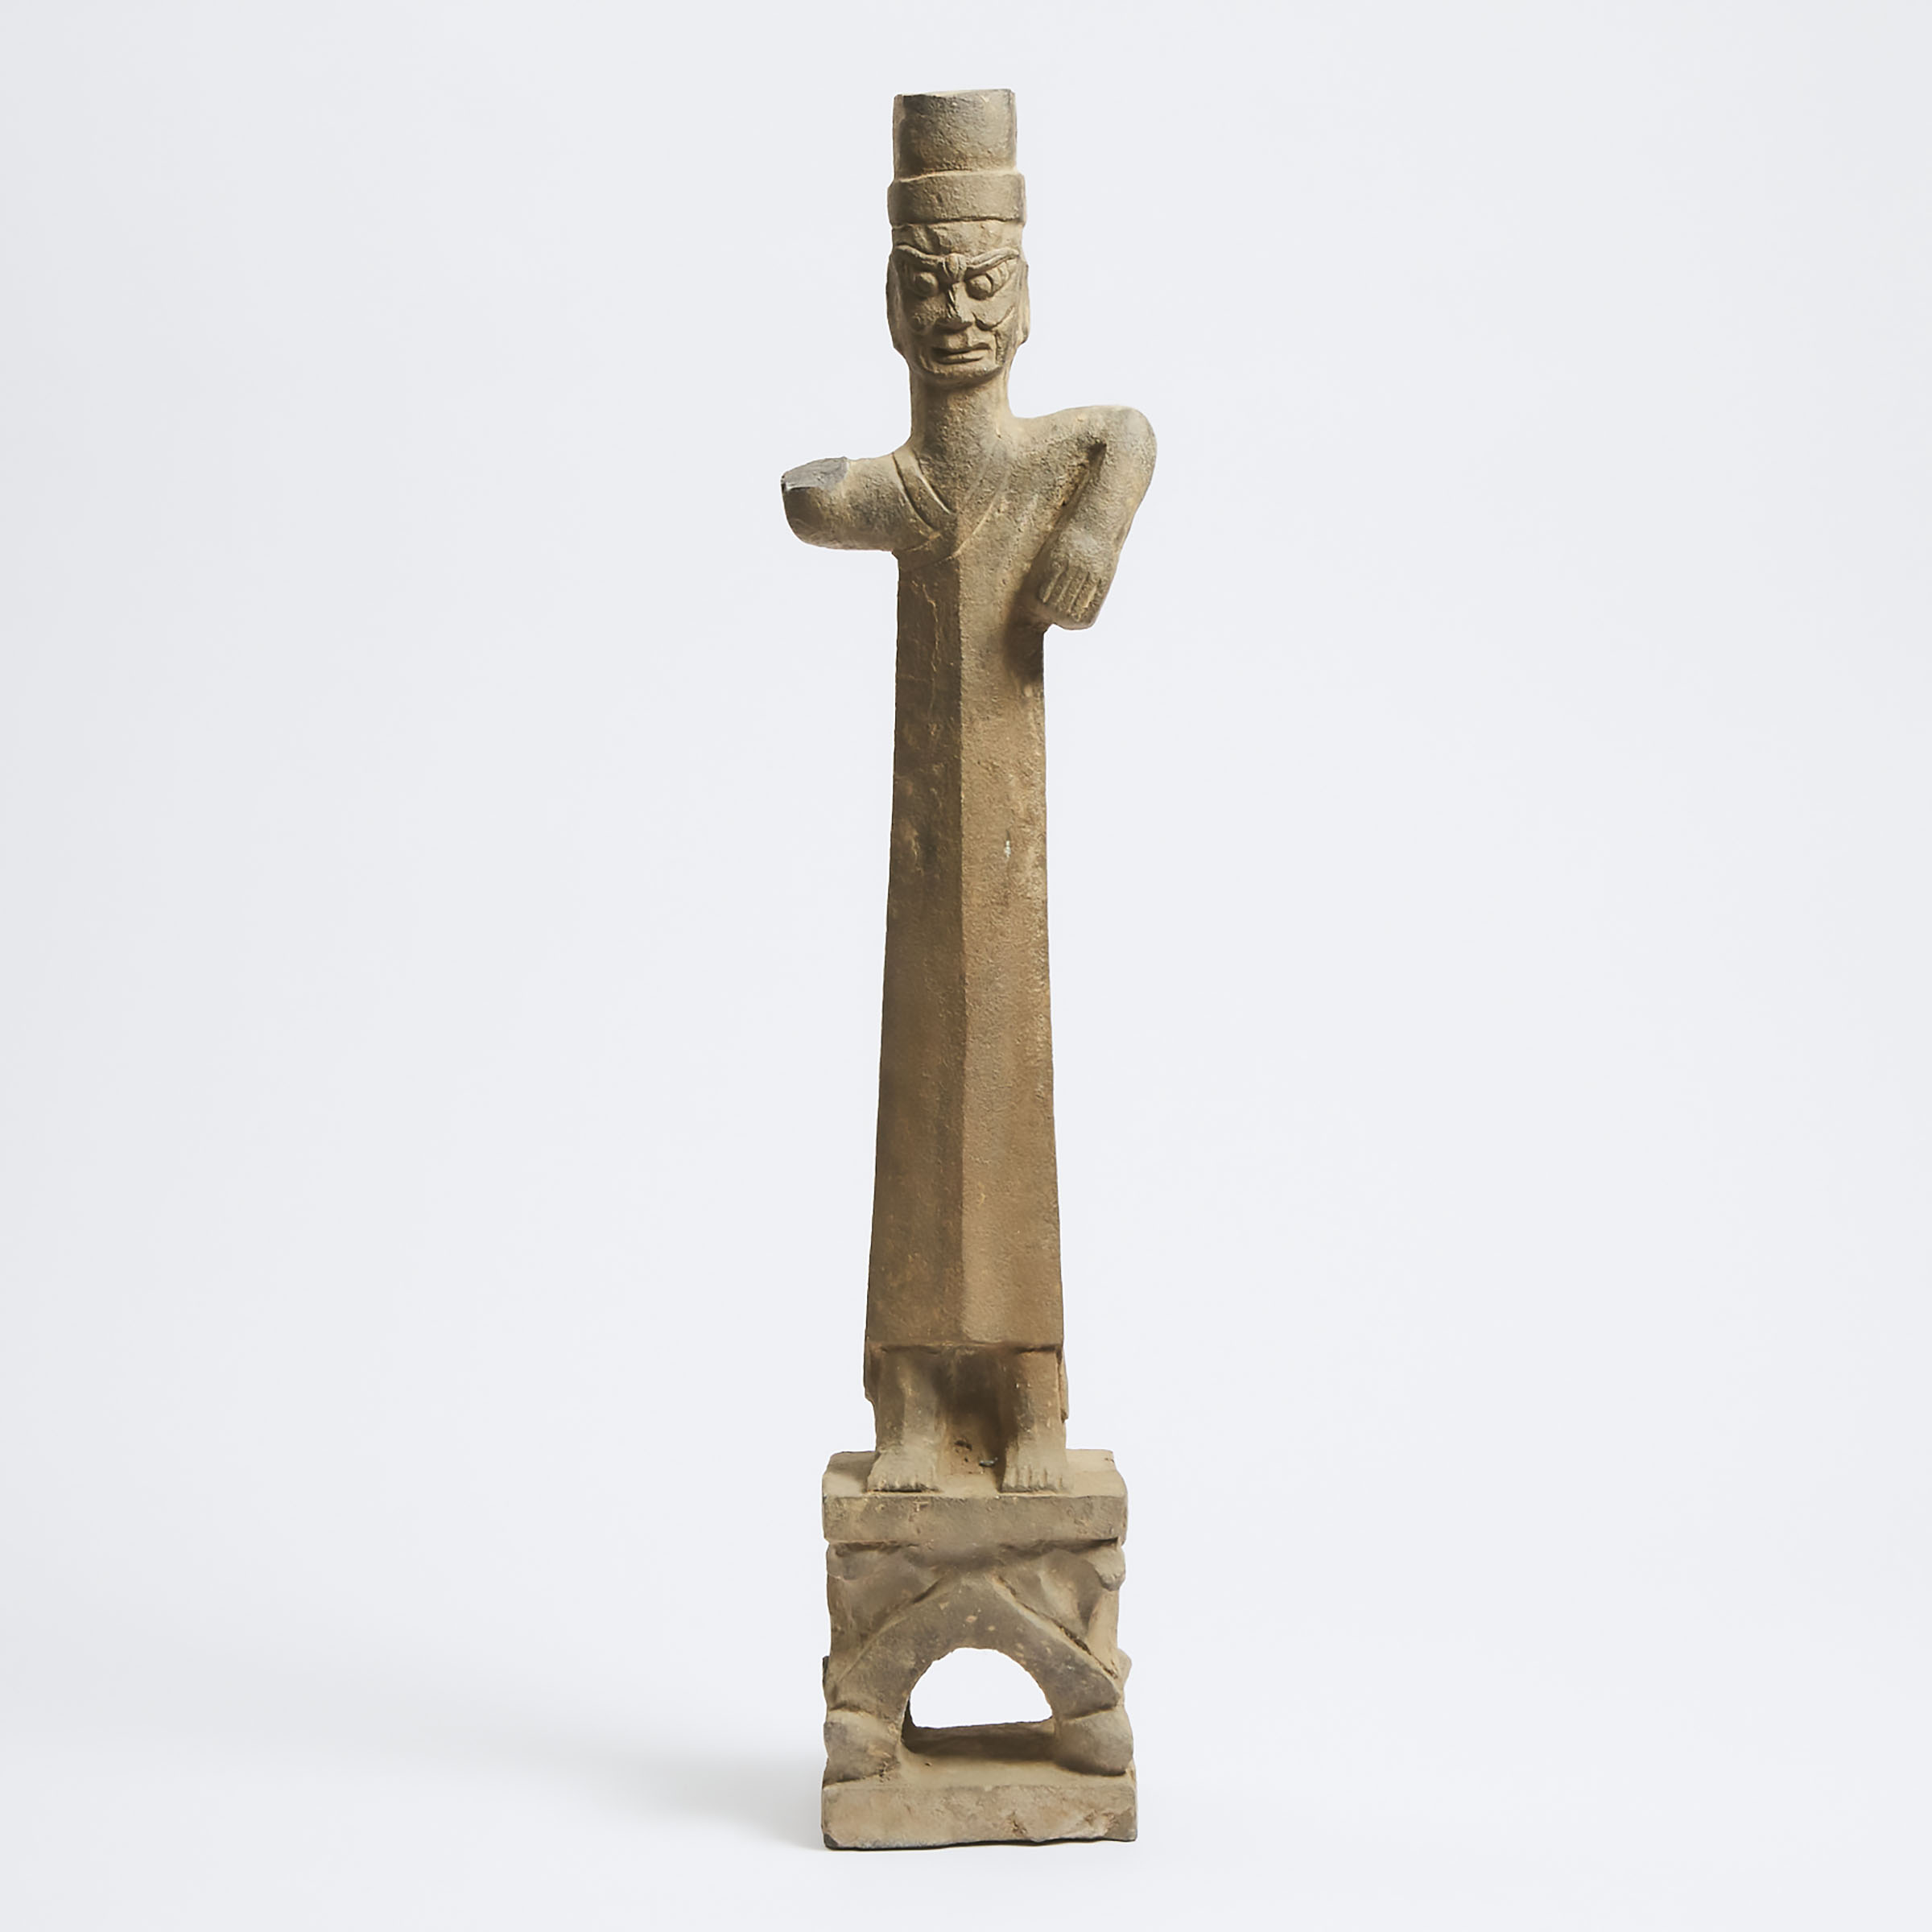 An Archaic Sanxingdui-Style Stone Figure of a Man